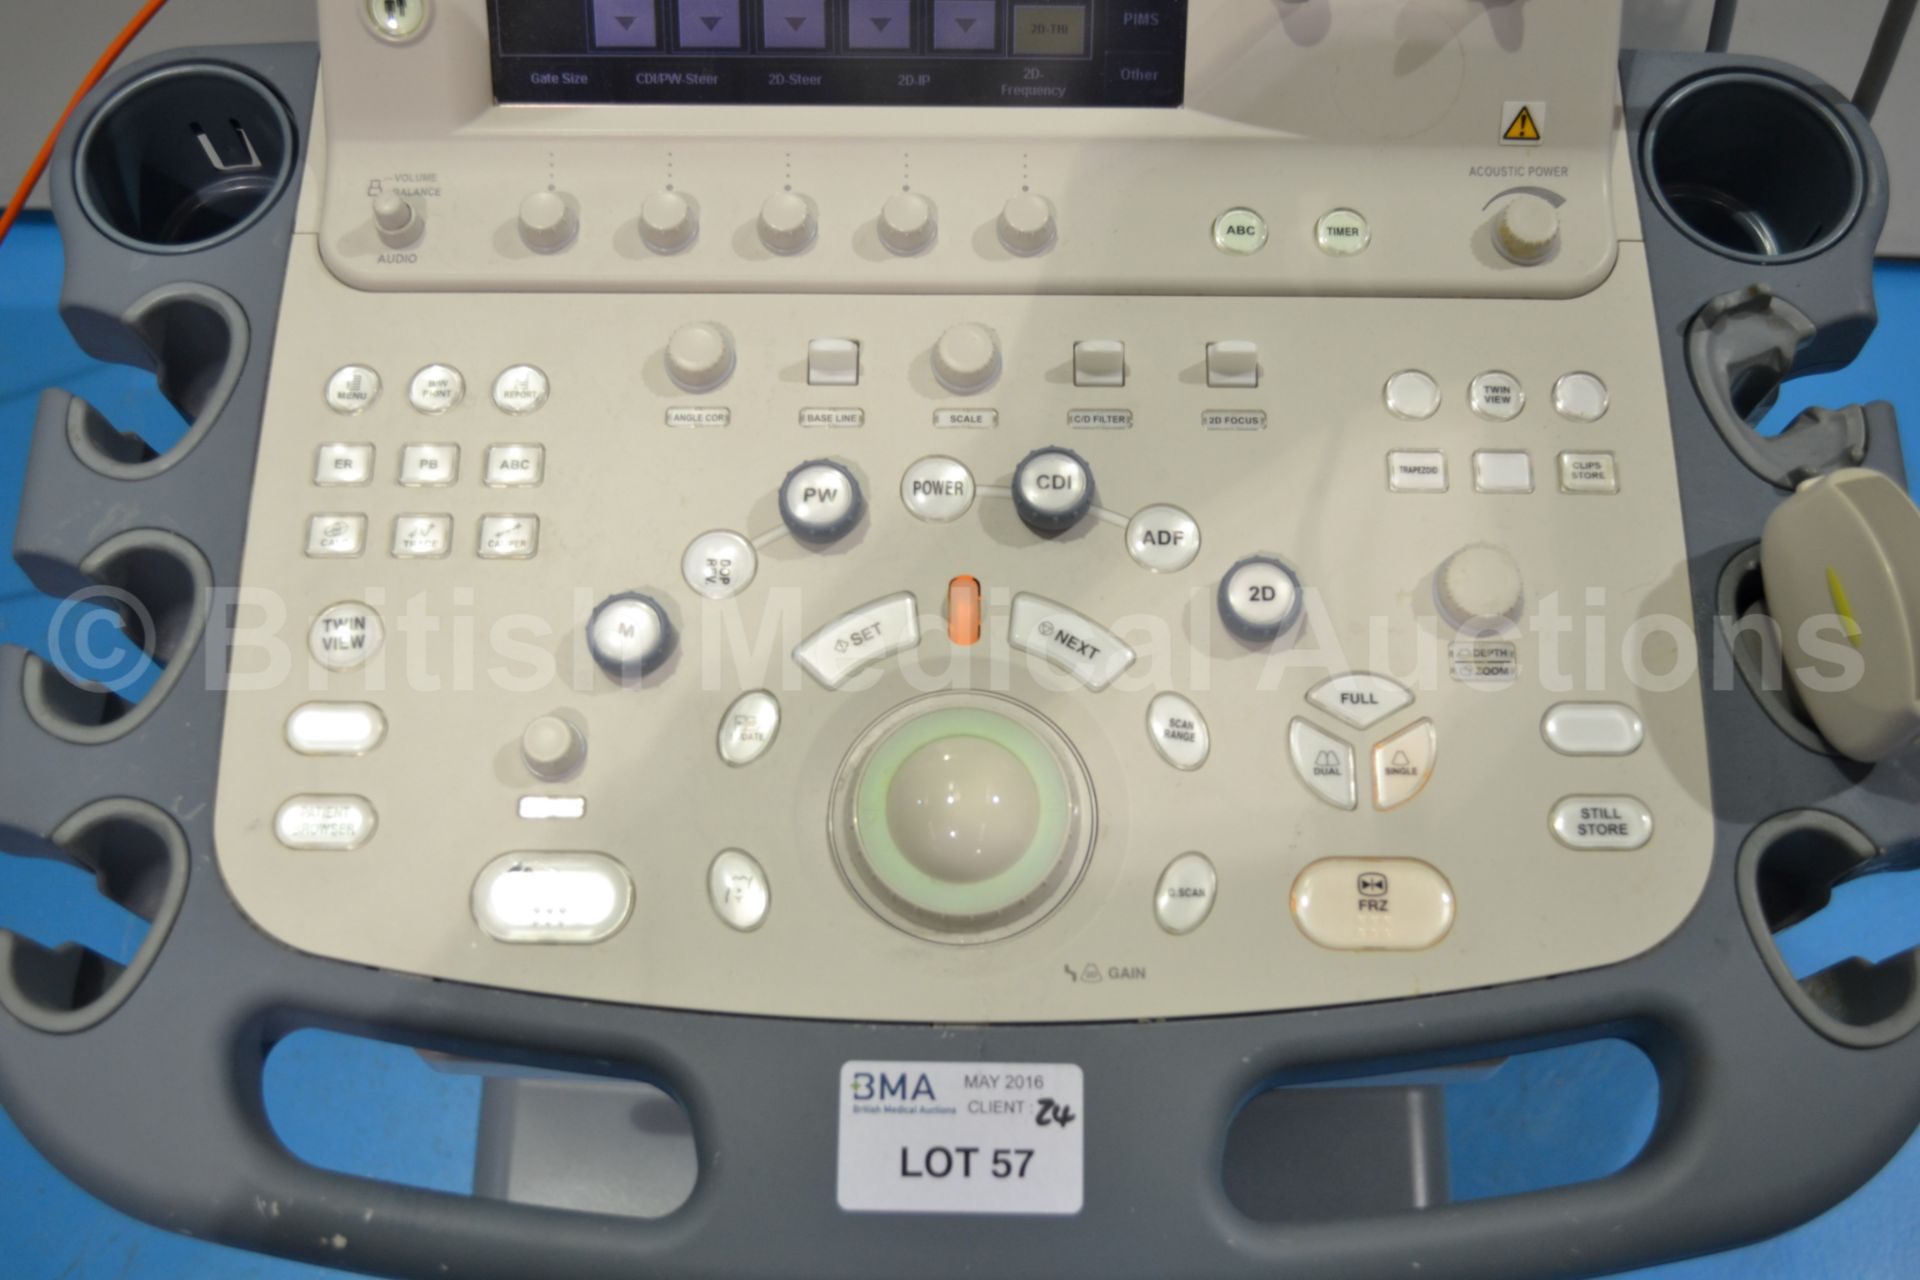 Toshiba Aplio XG iStyle Ultrasound System with One - Image 3 of 5